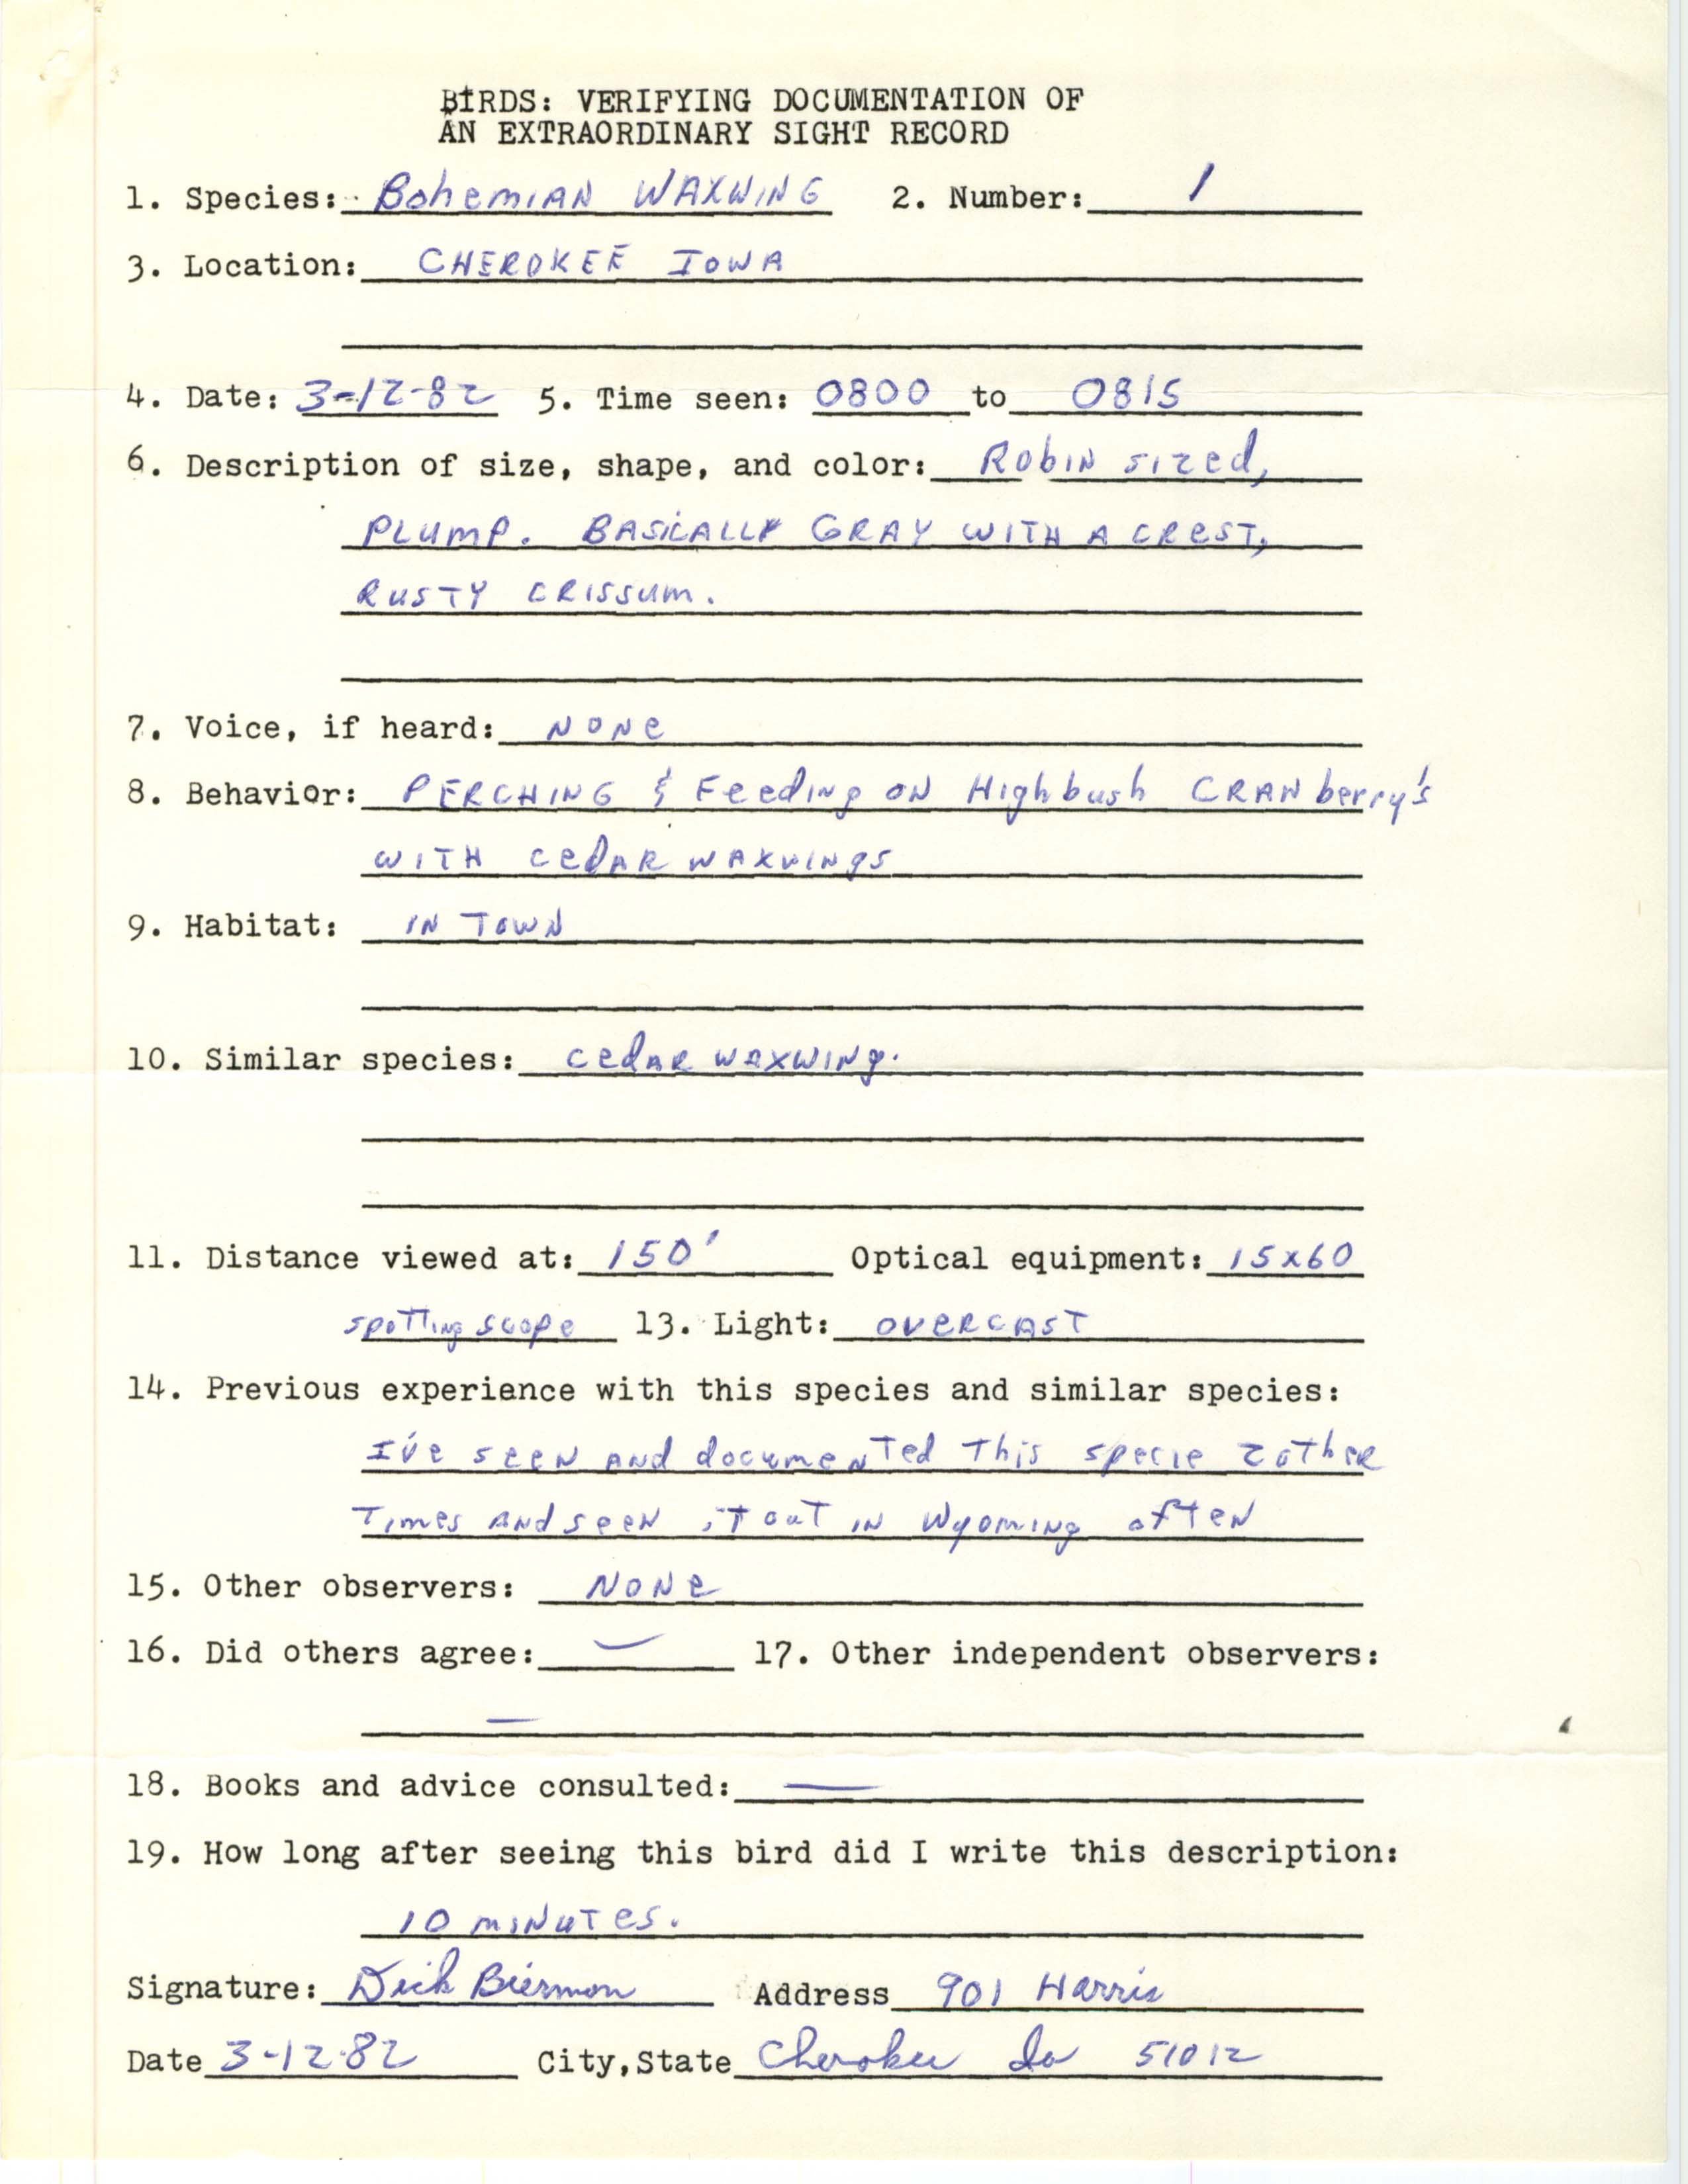 Rare bird documentation form for Bohemian Waxwing at Cherokee, 1982